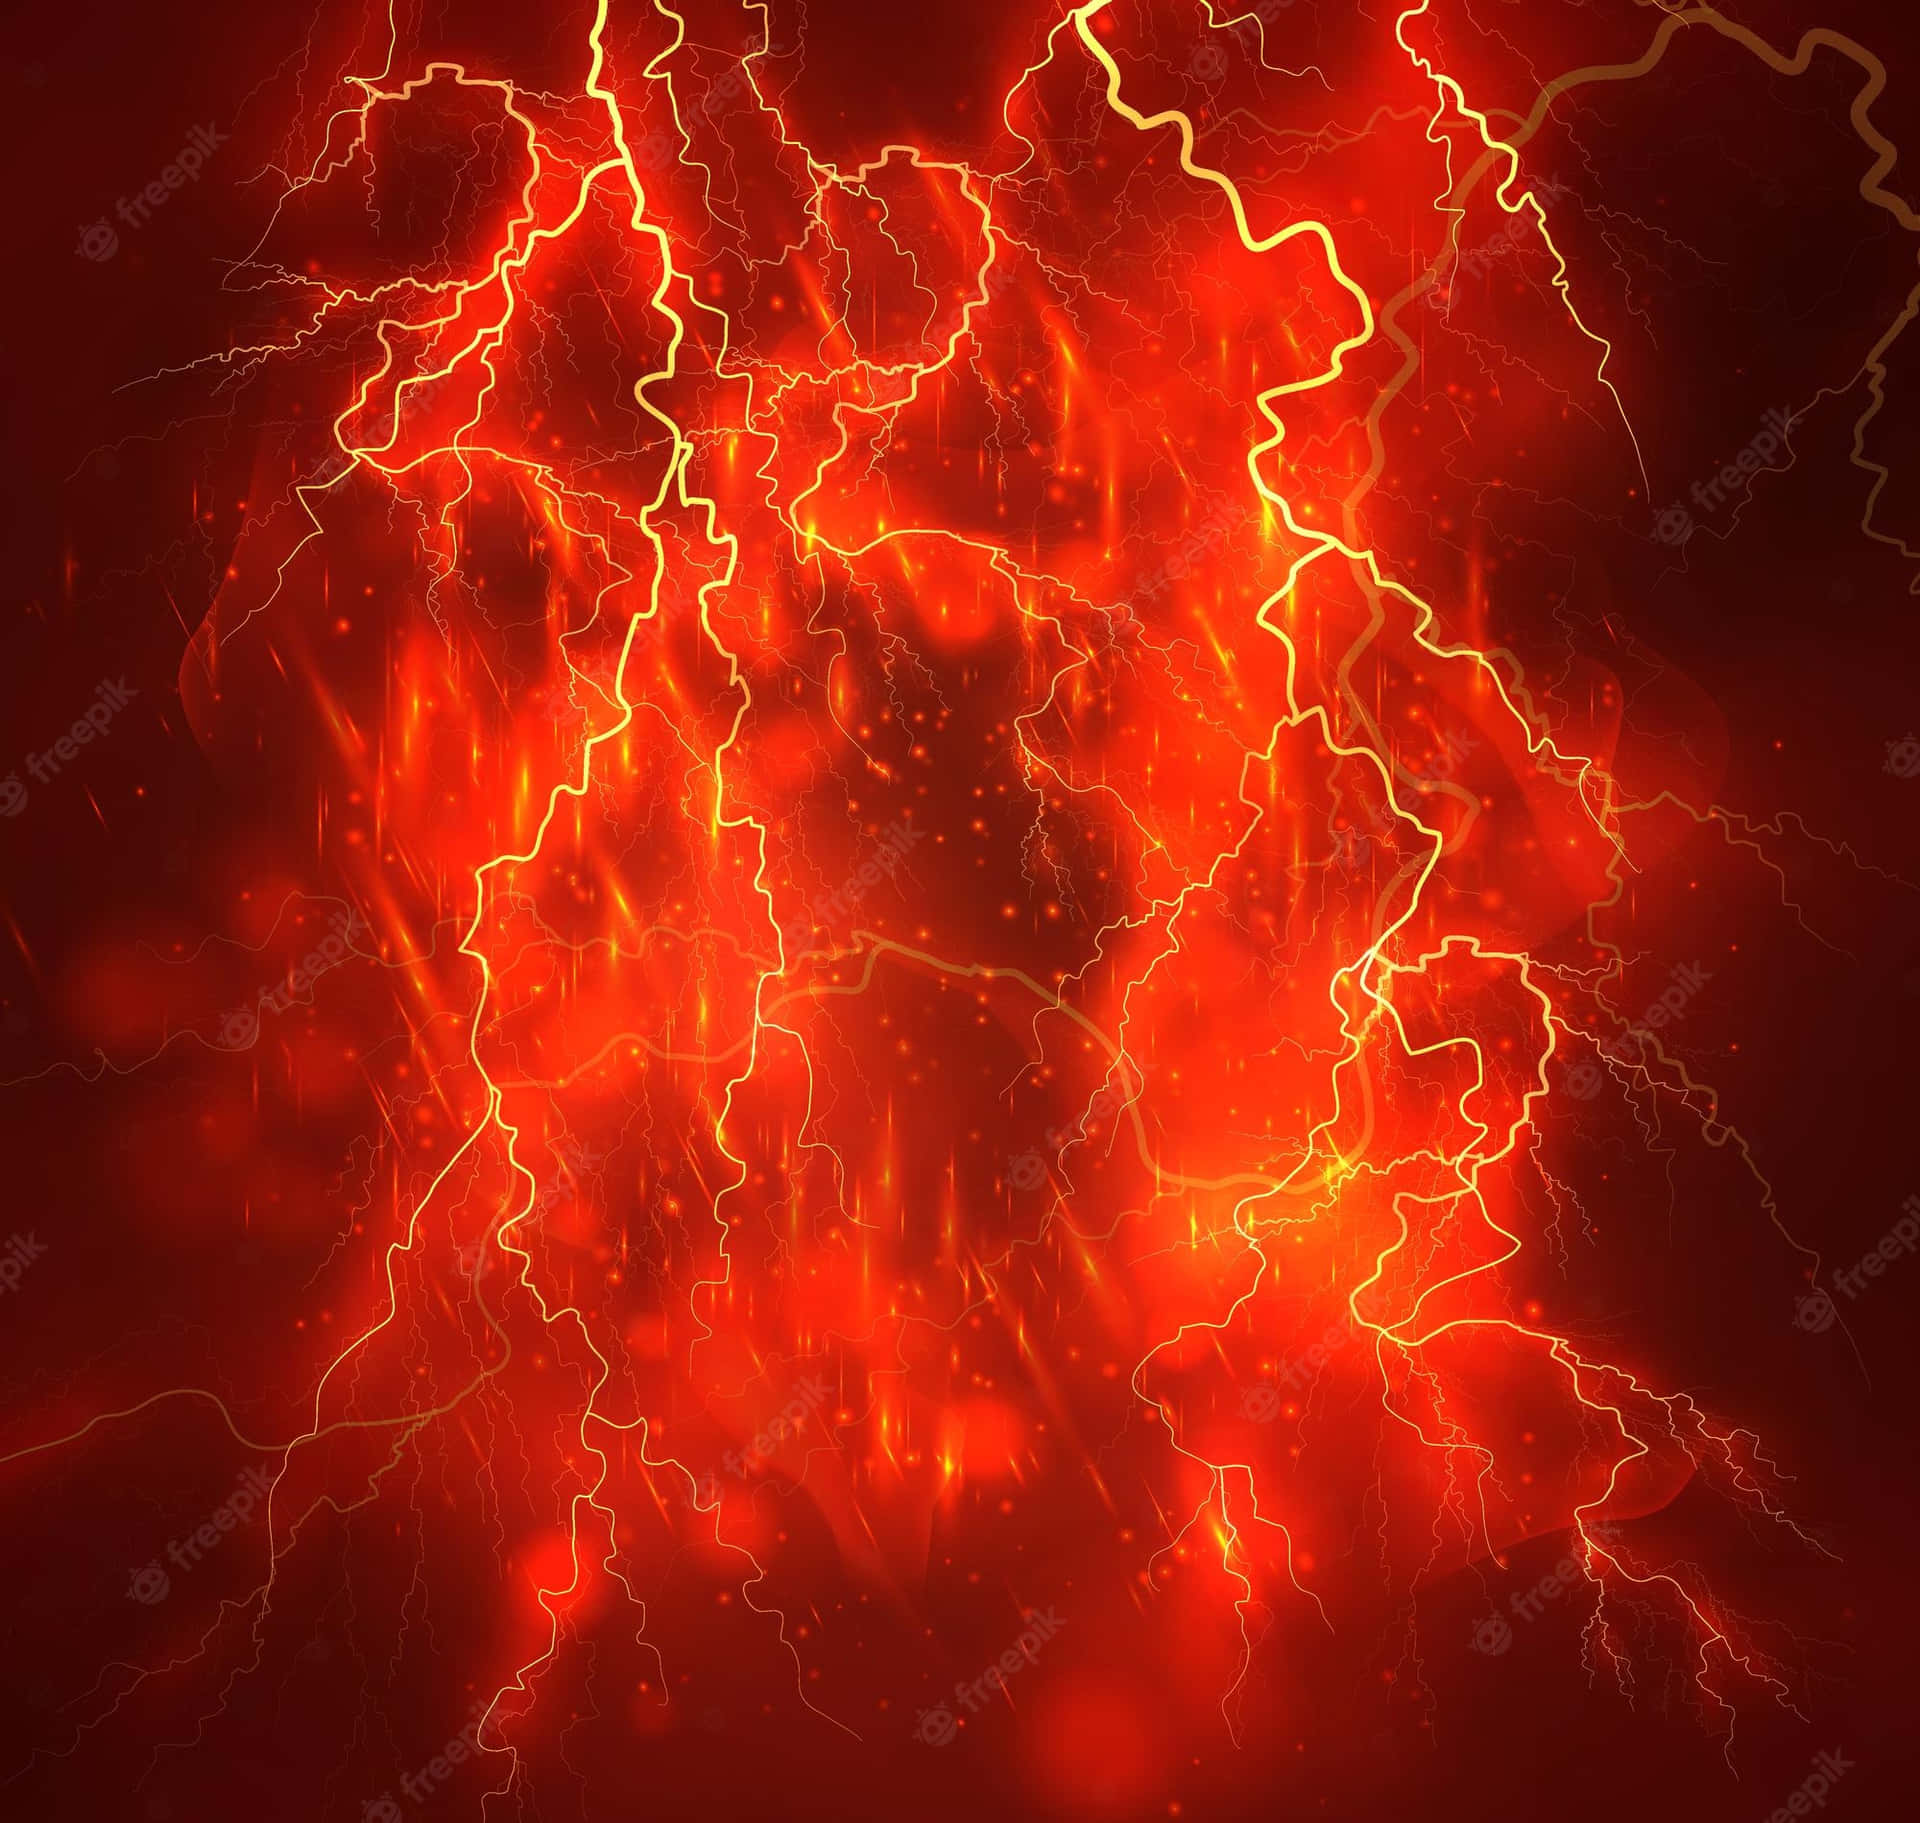 Red Lightning Pictures  Download Free Images on Unsplash